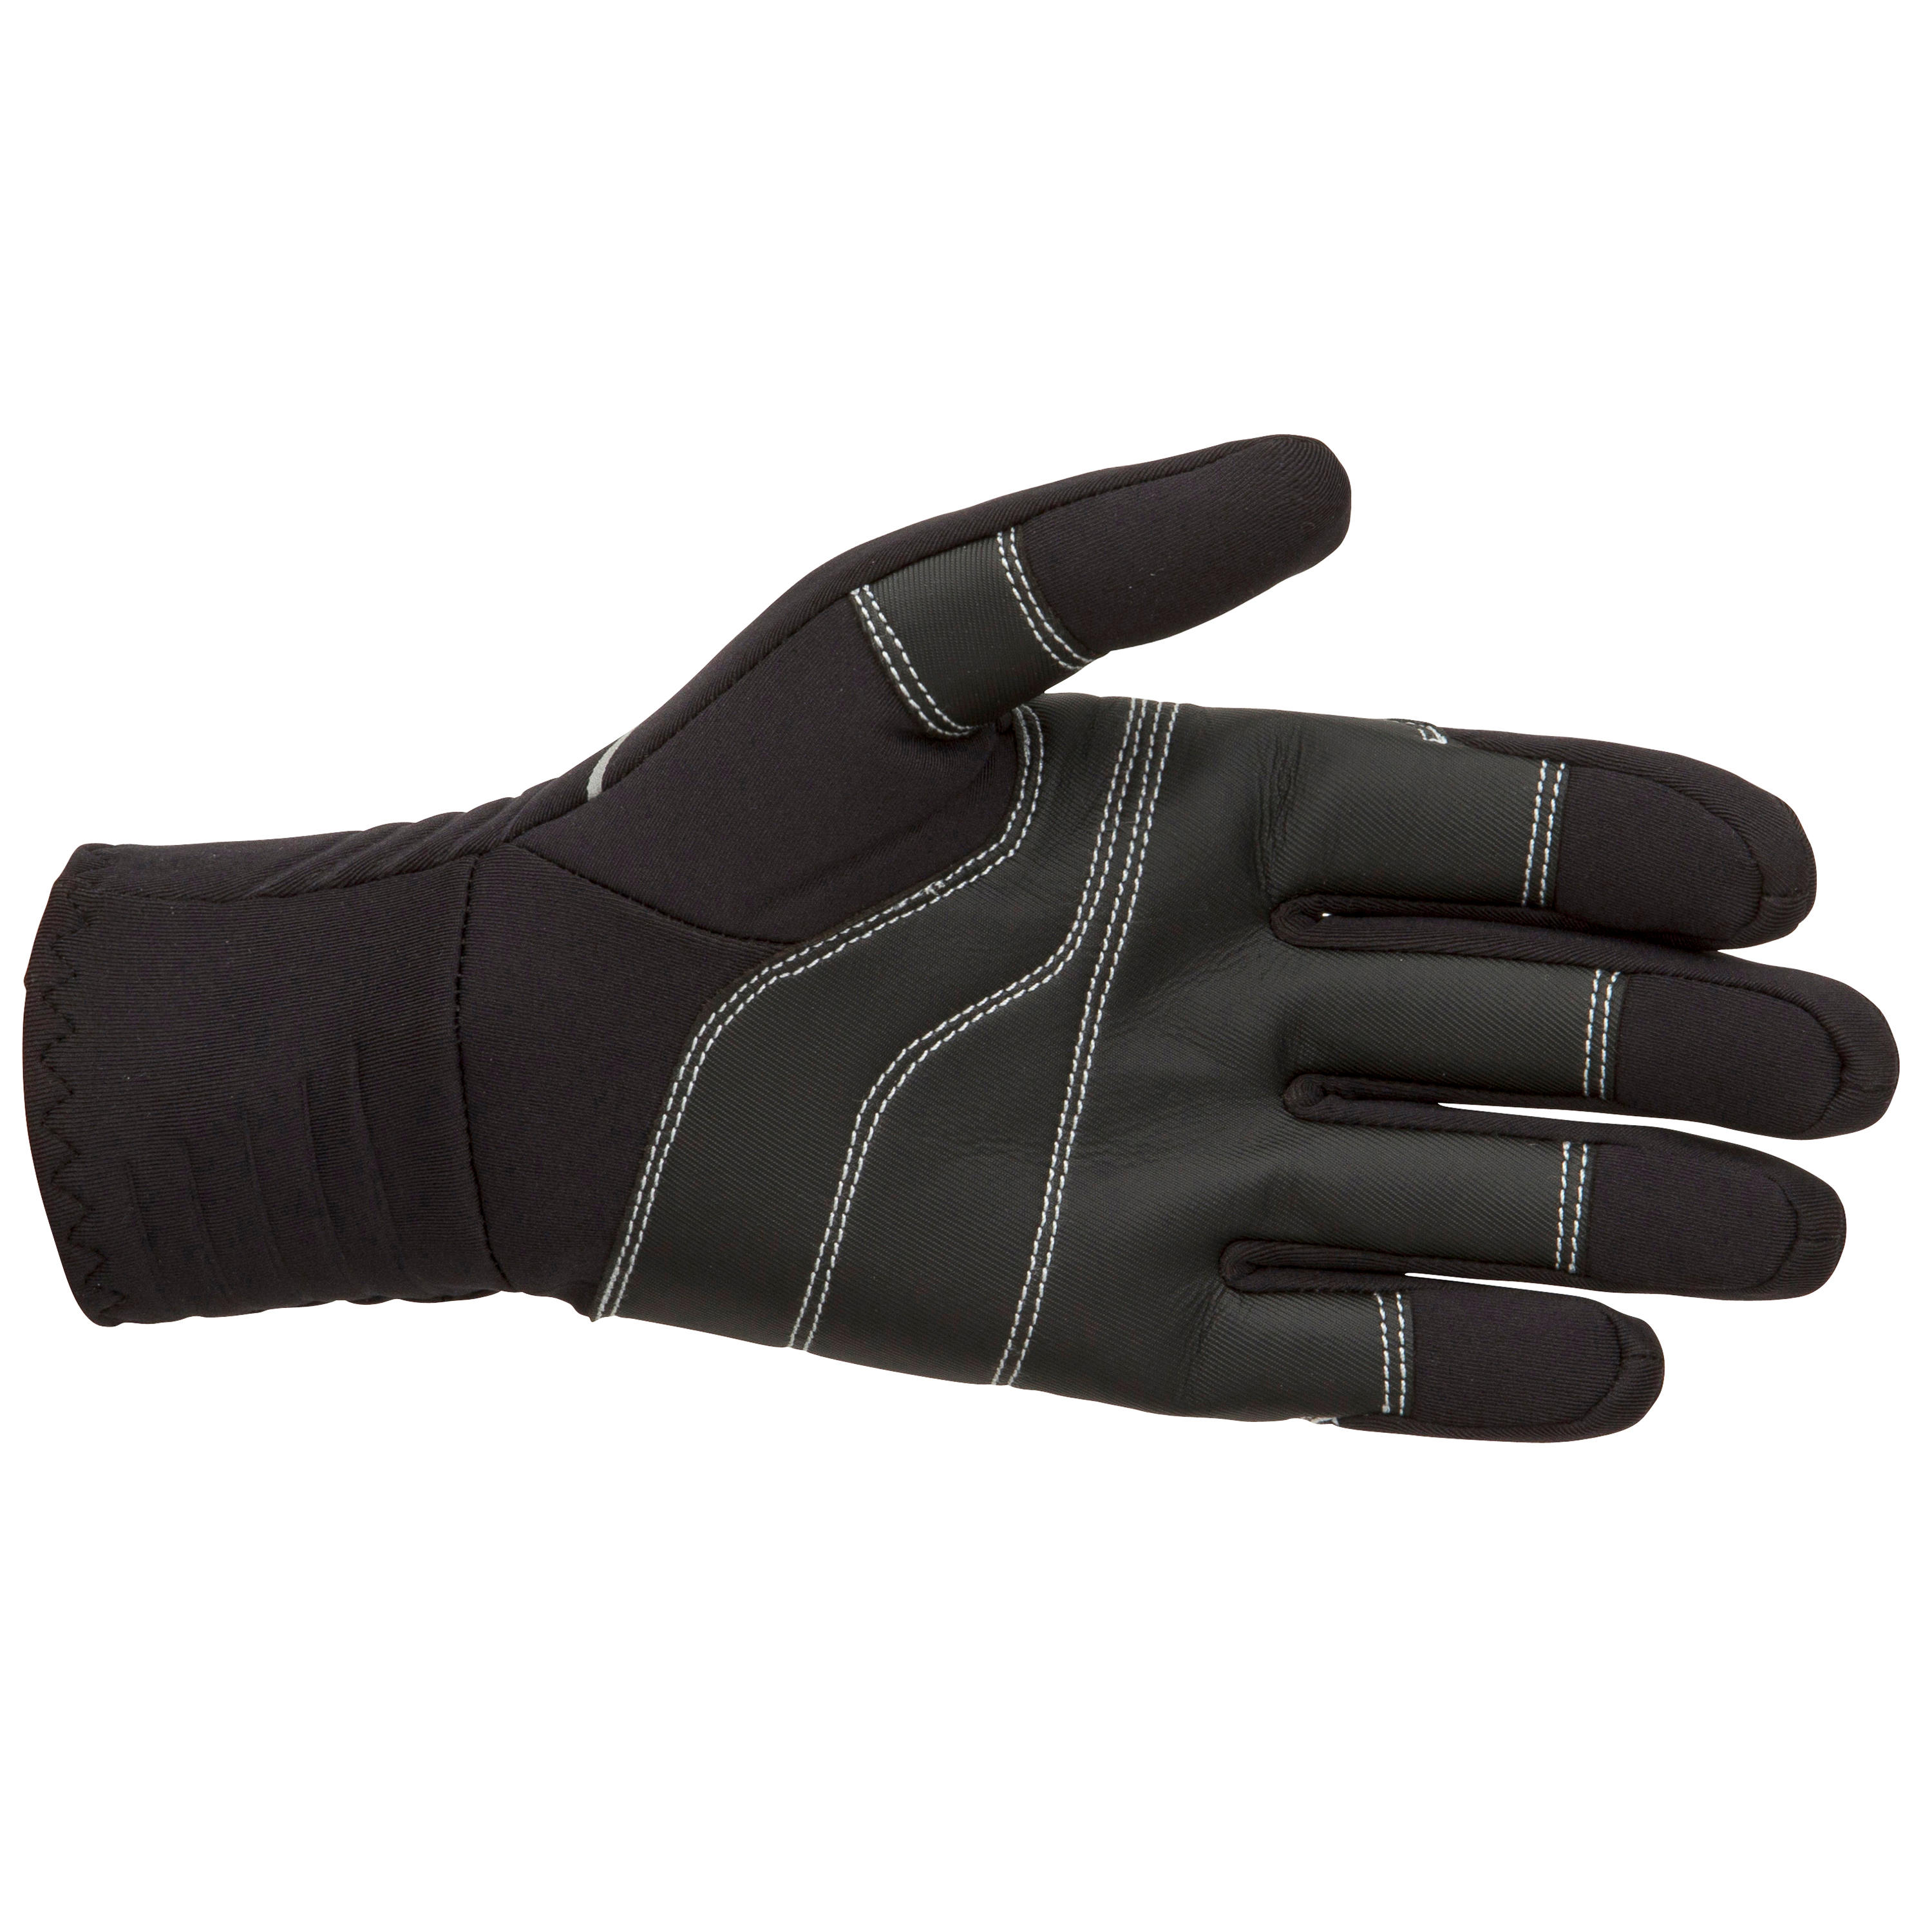 Adult sailing gloves 900 - 1 mm neoprene, black TRIBORD